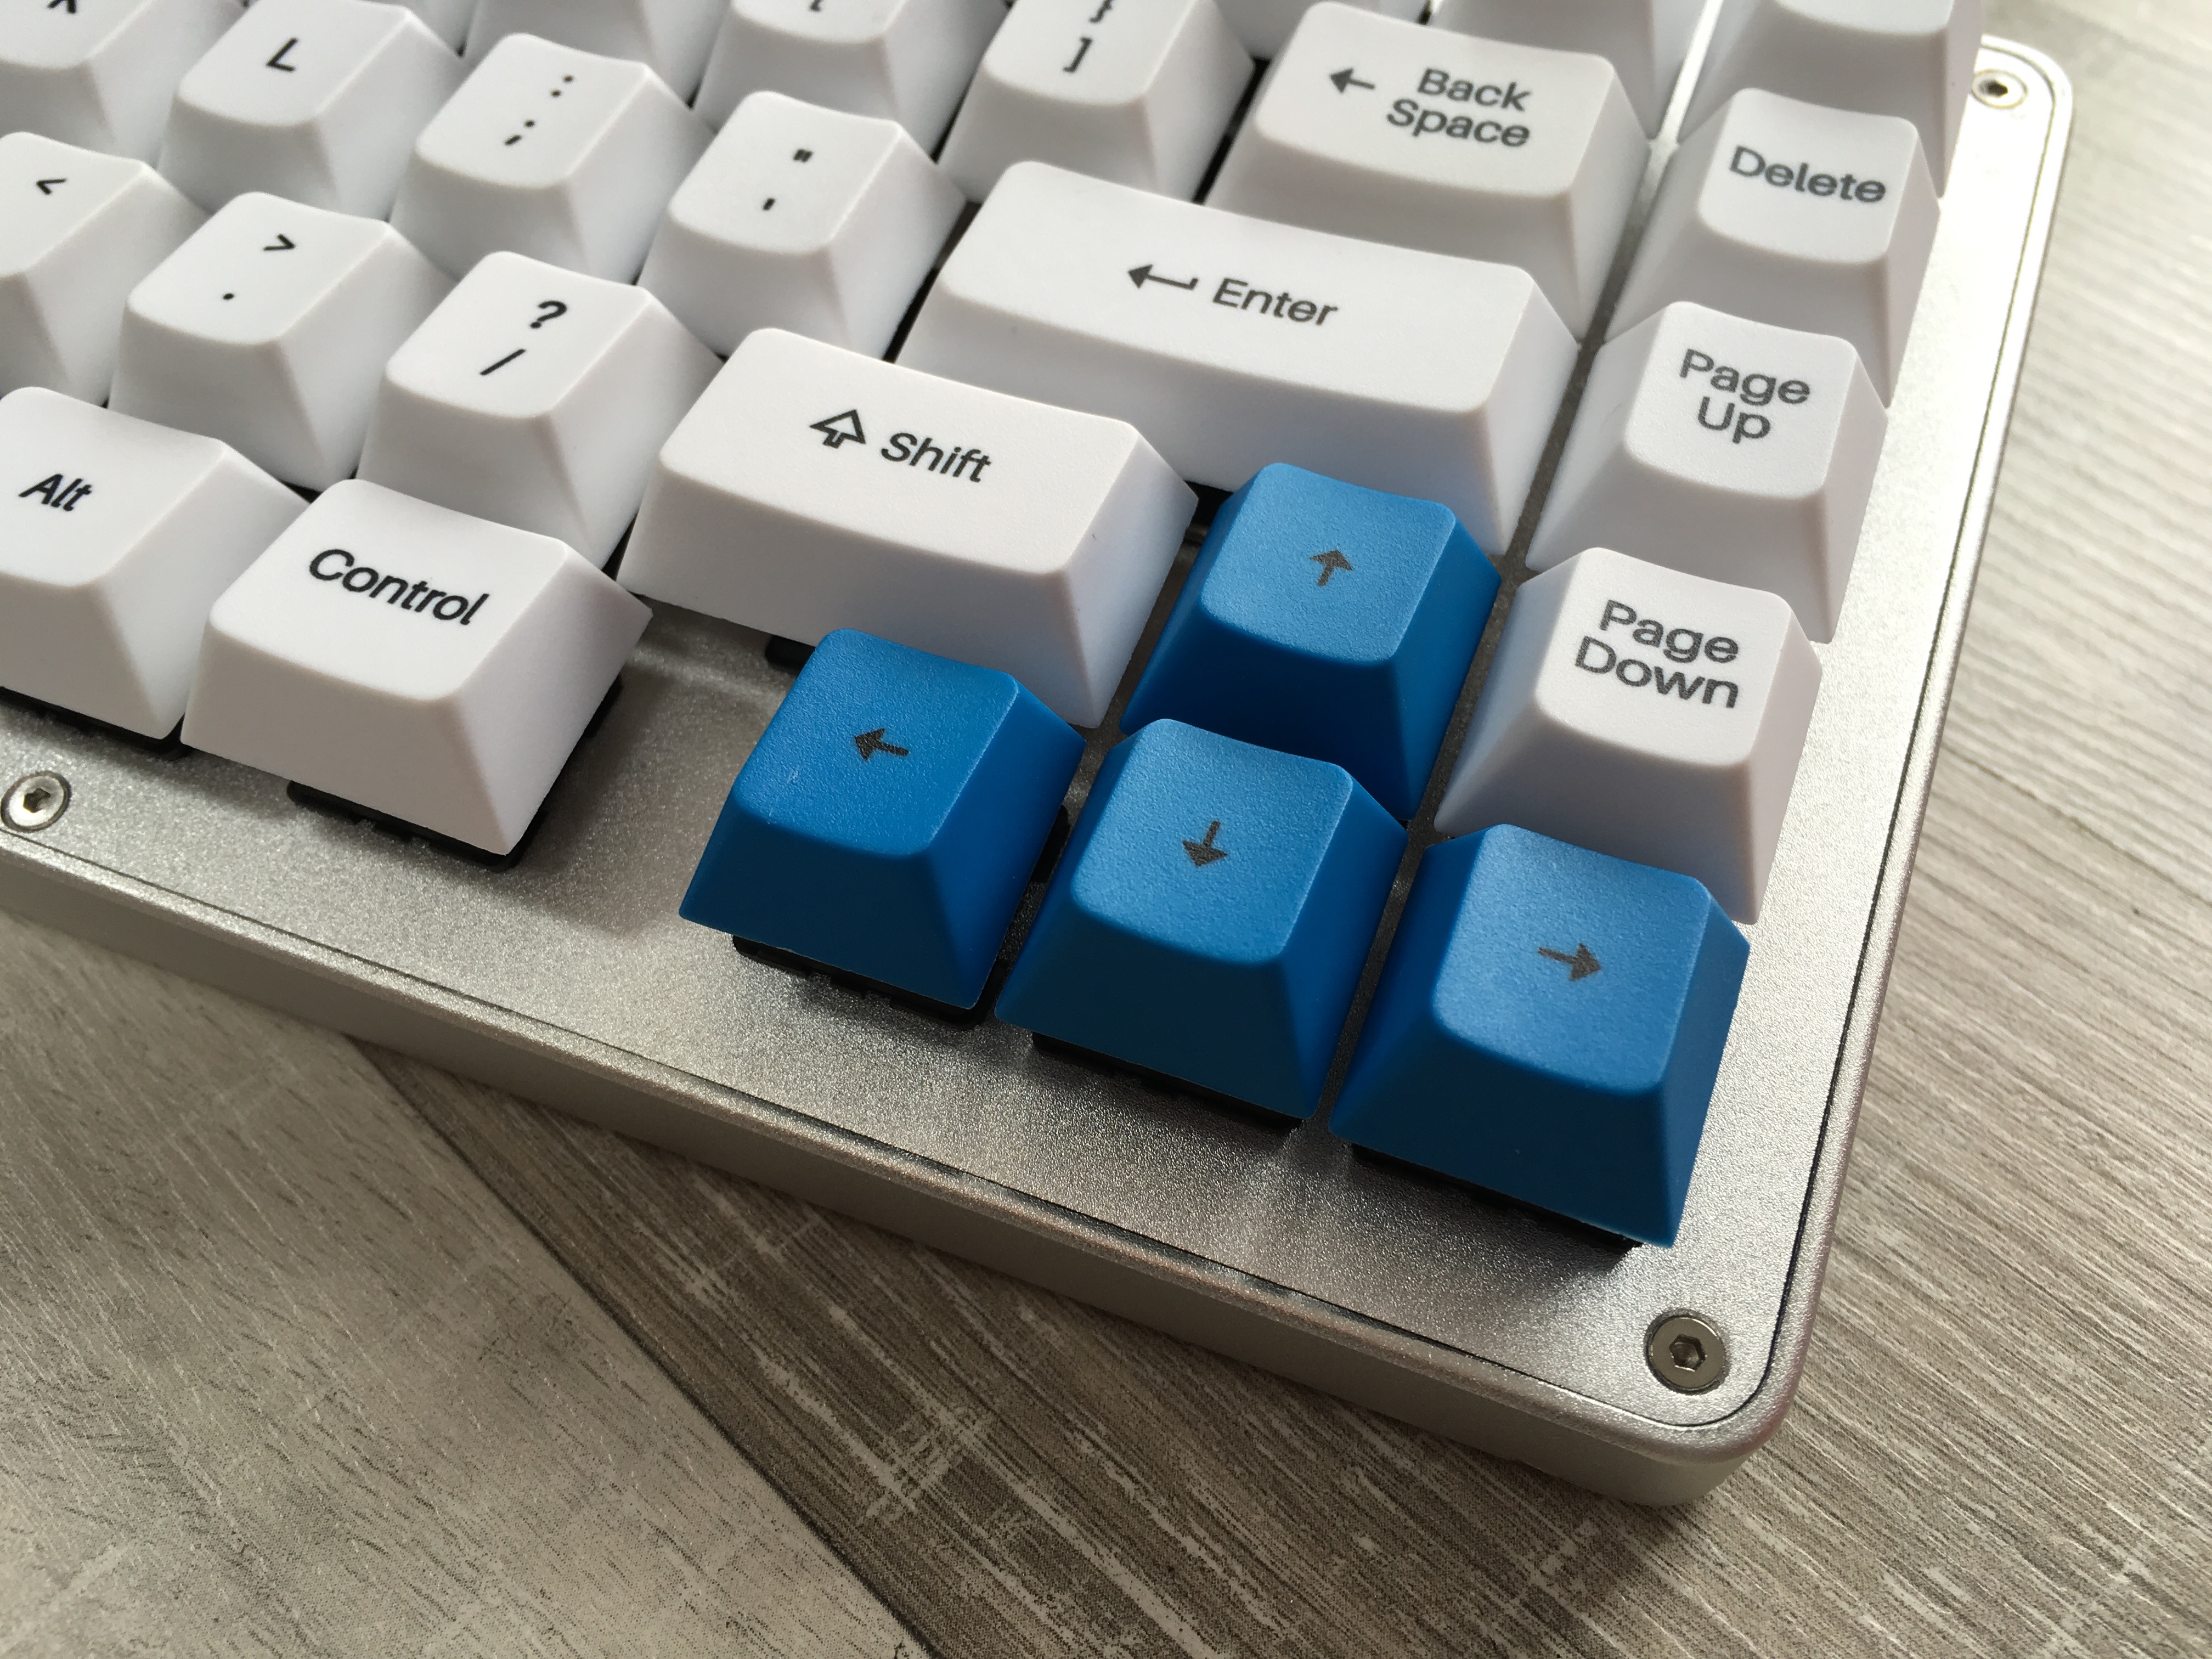 Closeup of the arrow keys on the Whitefox keyboard